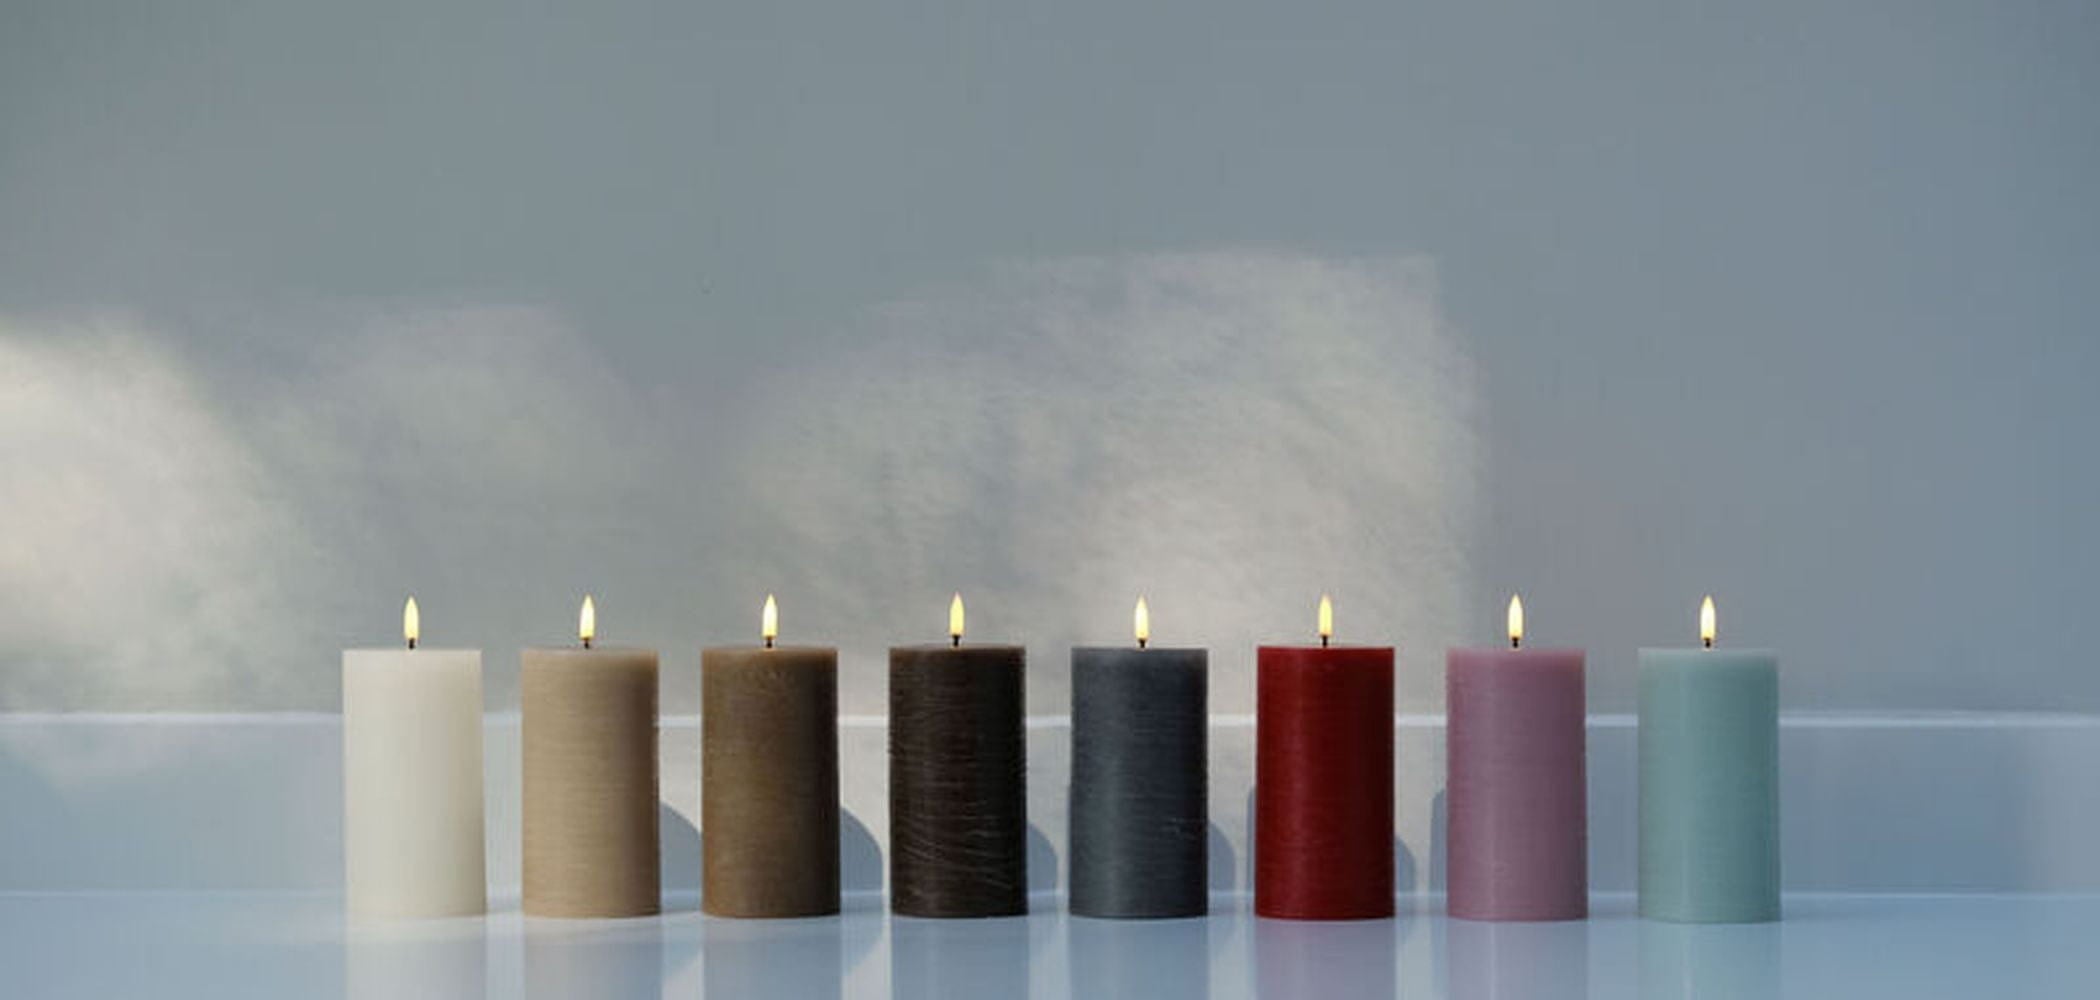 Uyuni Lighting LED Pilier Candle 3 D Flame 7,8x15 cm, vanille rustique